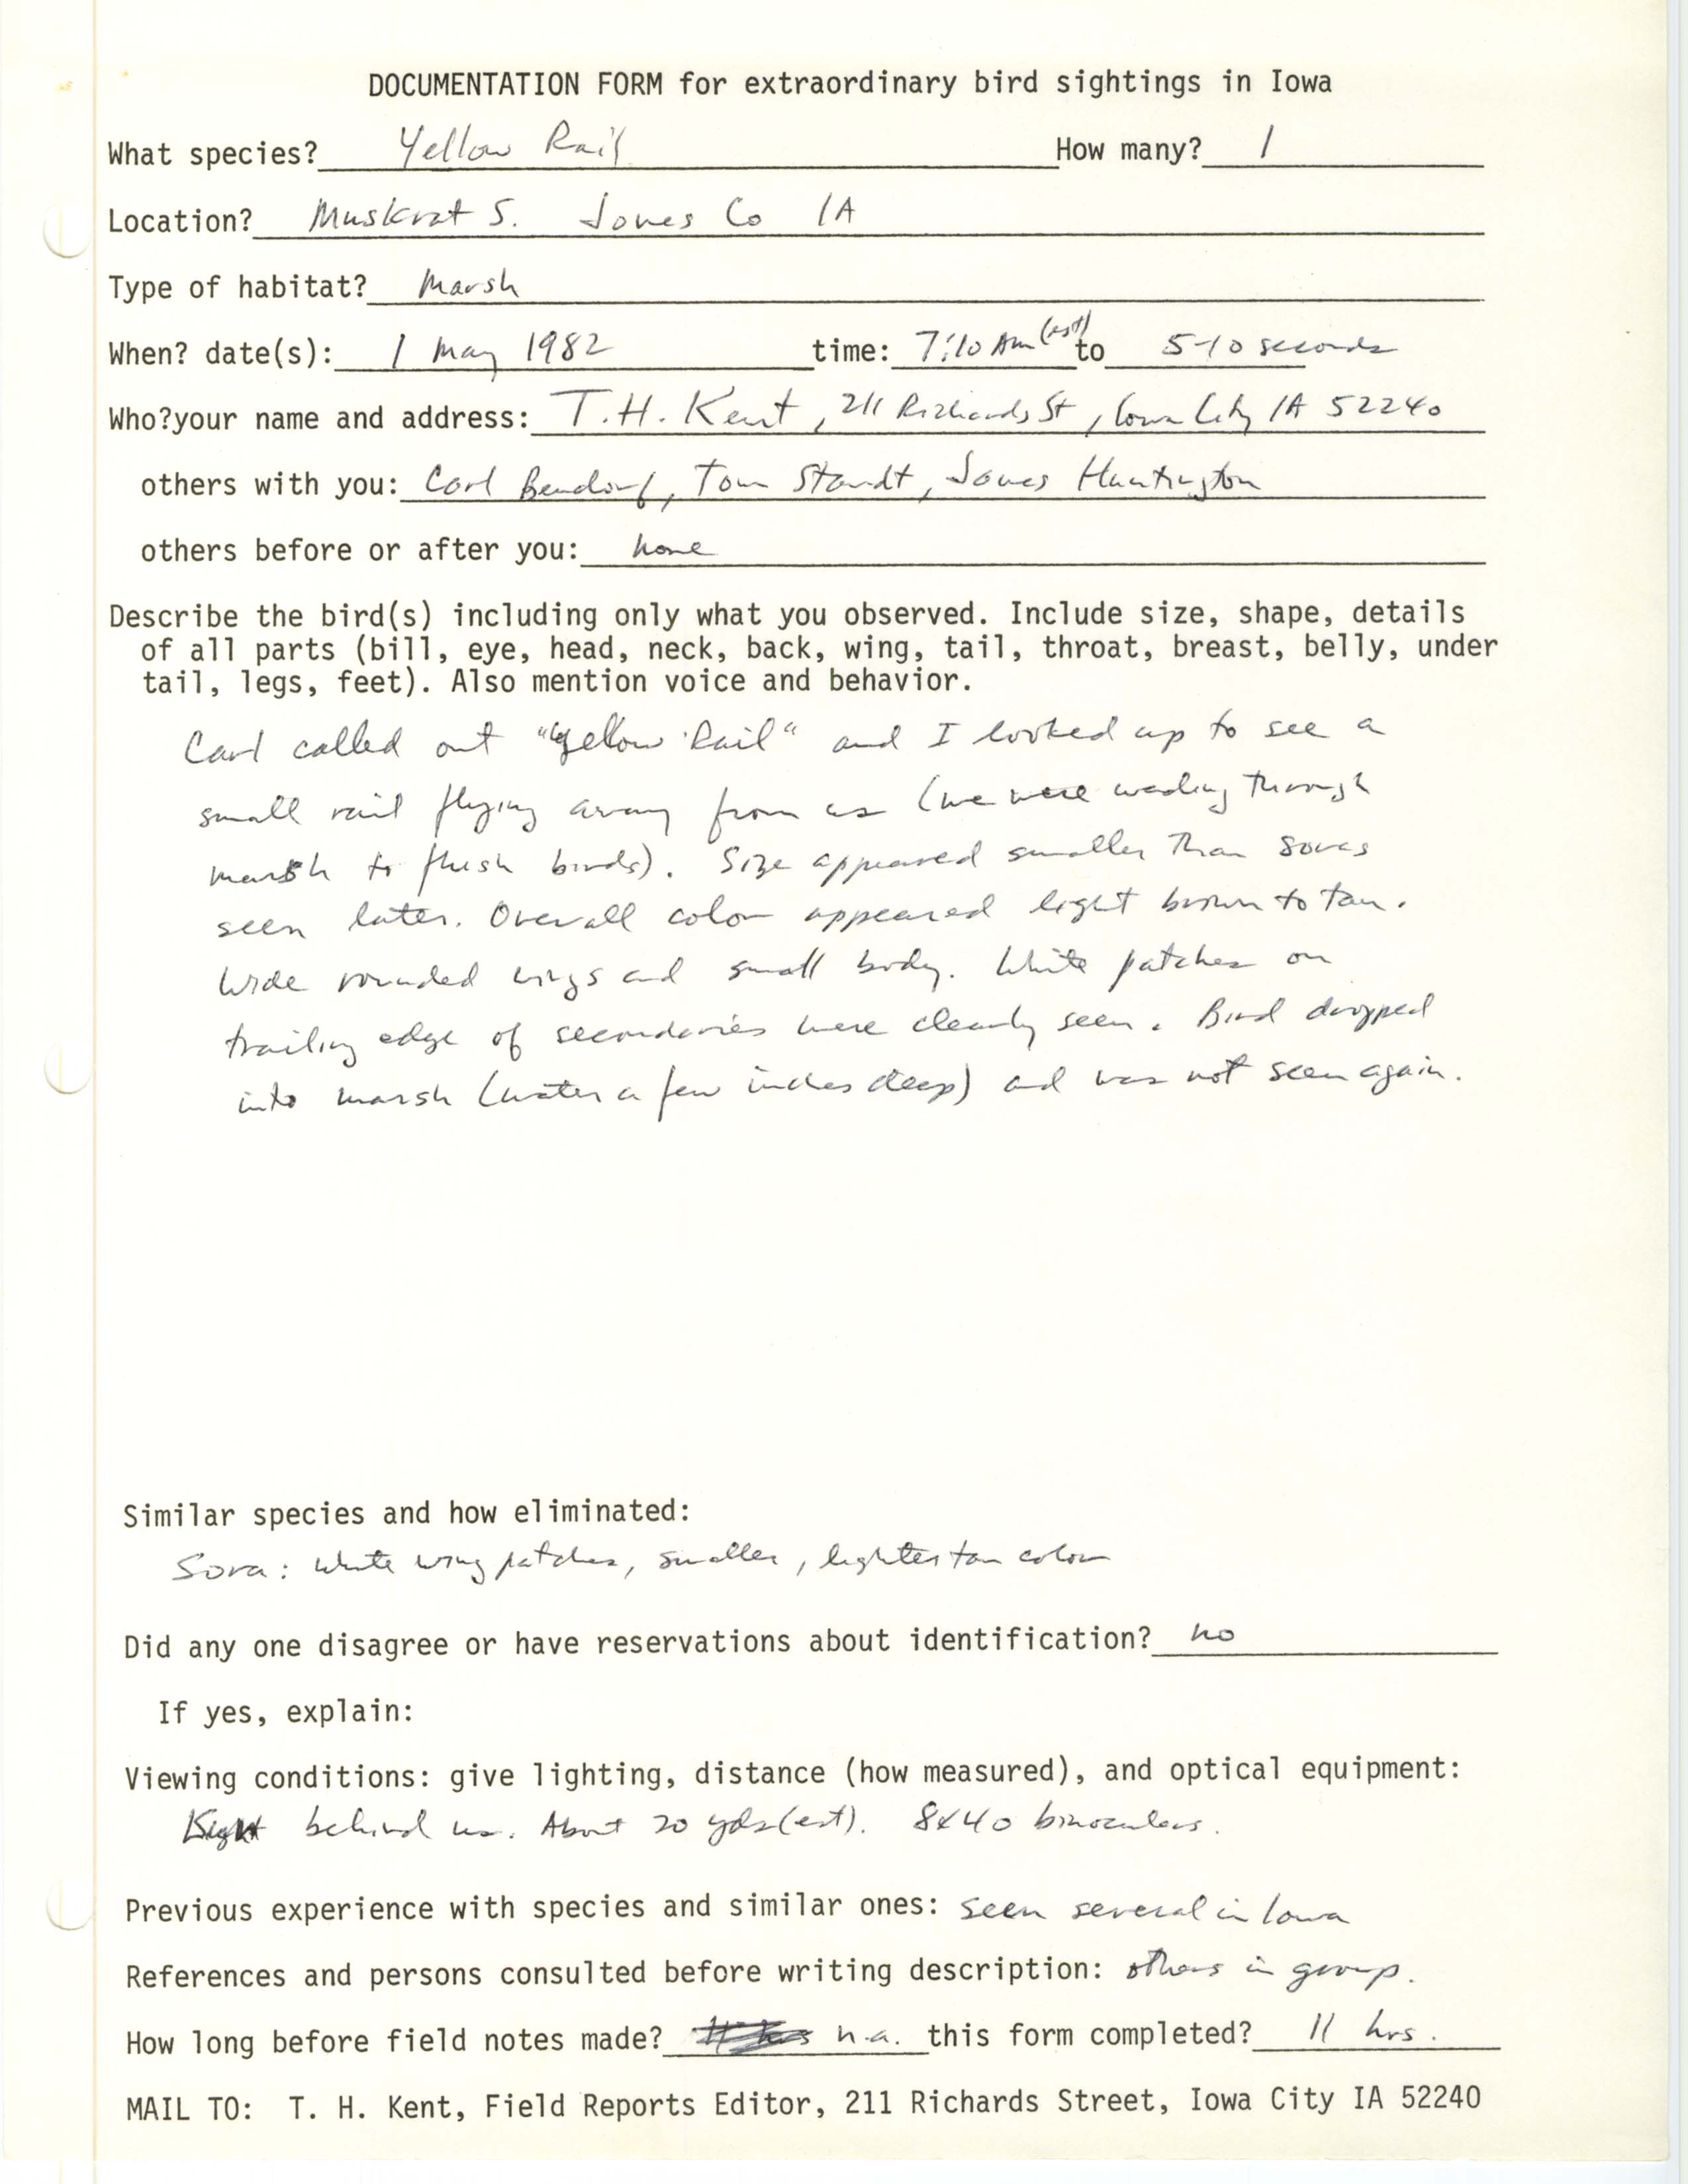 Rare bird documentation form for Yellow Rail at Muskrat Slough, 1982